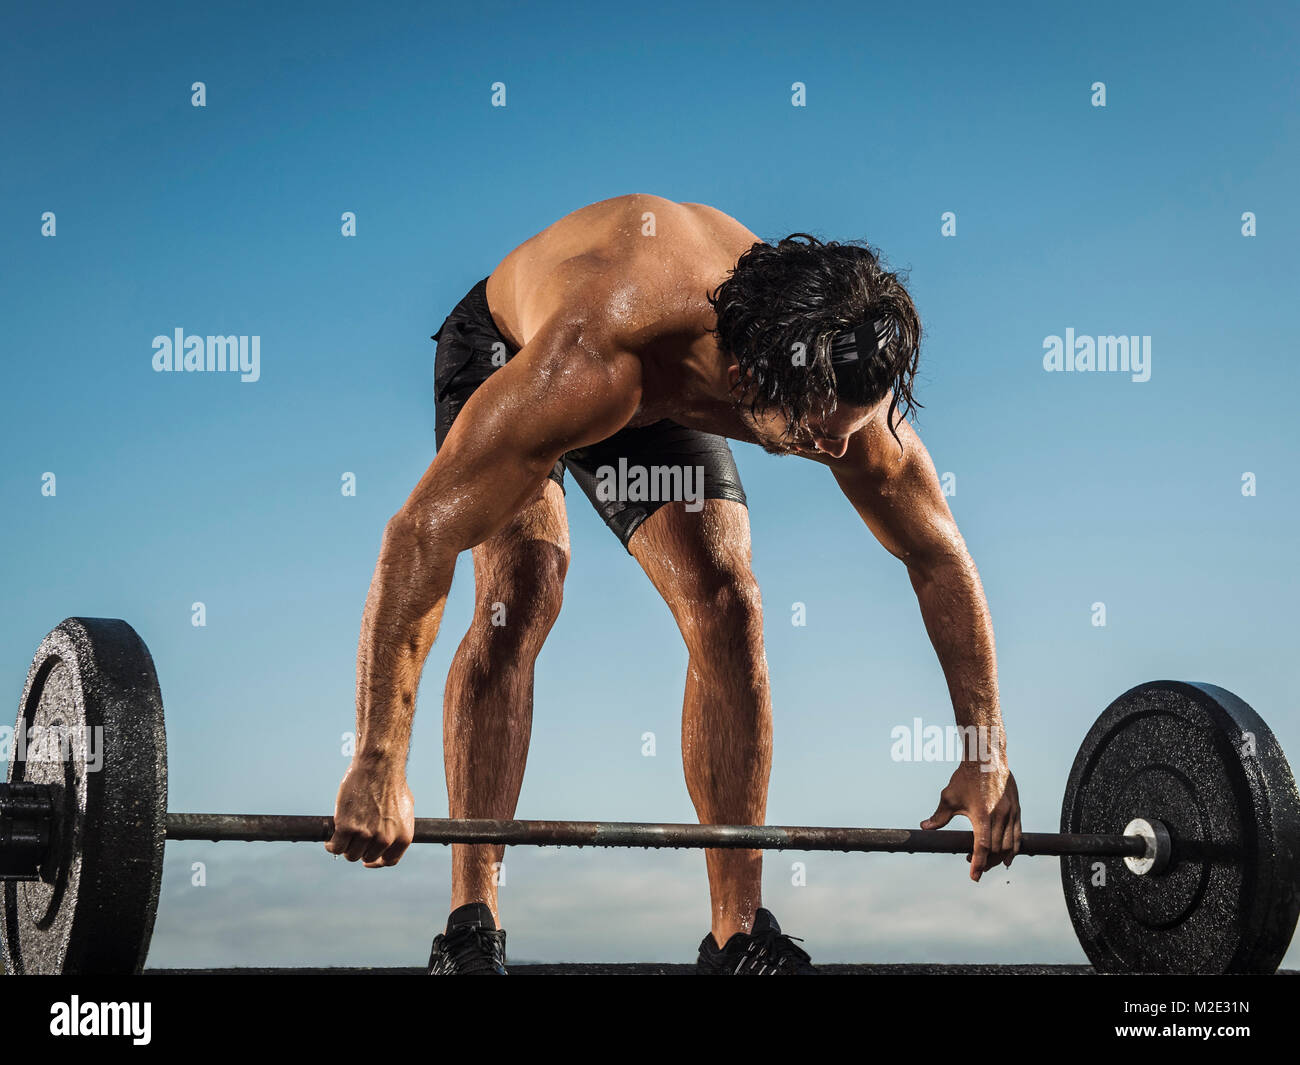 Sweating Hispanic man lifting barbell Stock Photo